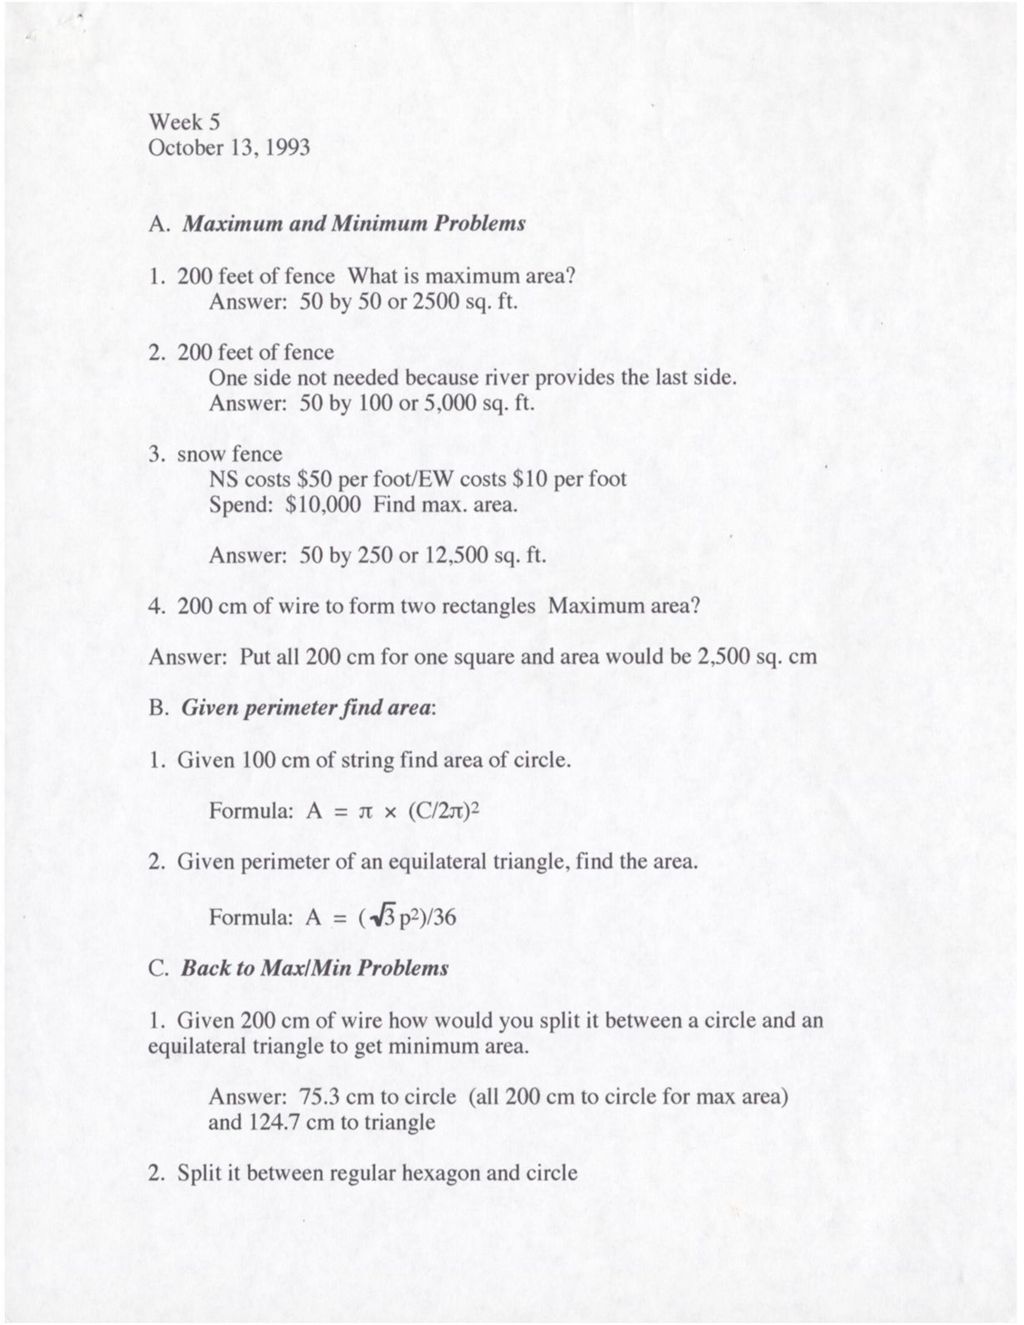 Miniature of Week 5 1993 Maximum and Minimum Problems w/ answers